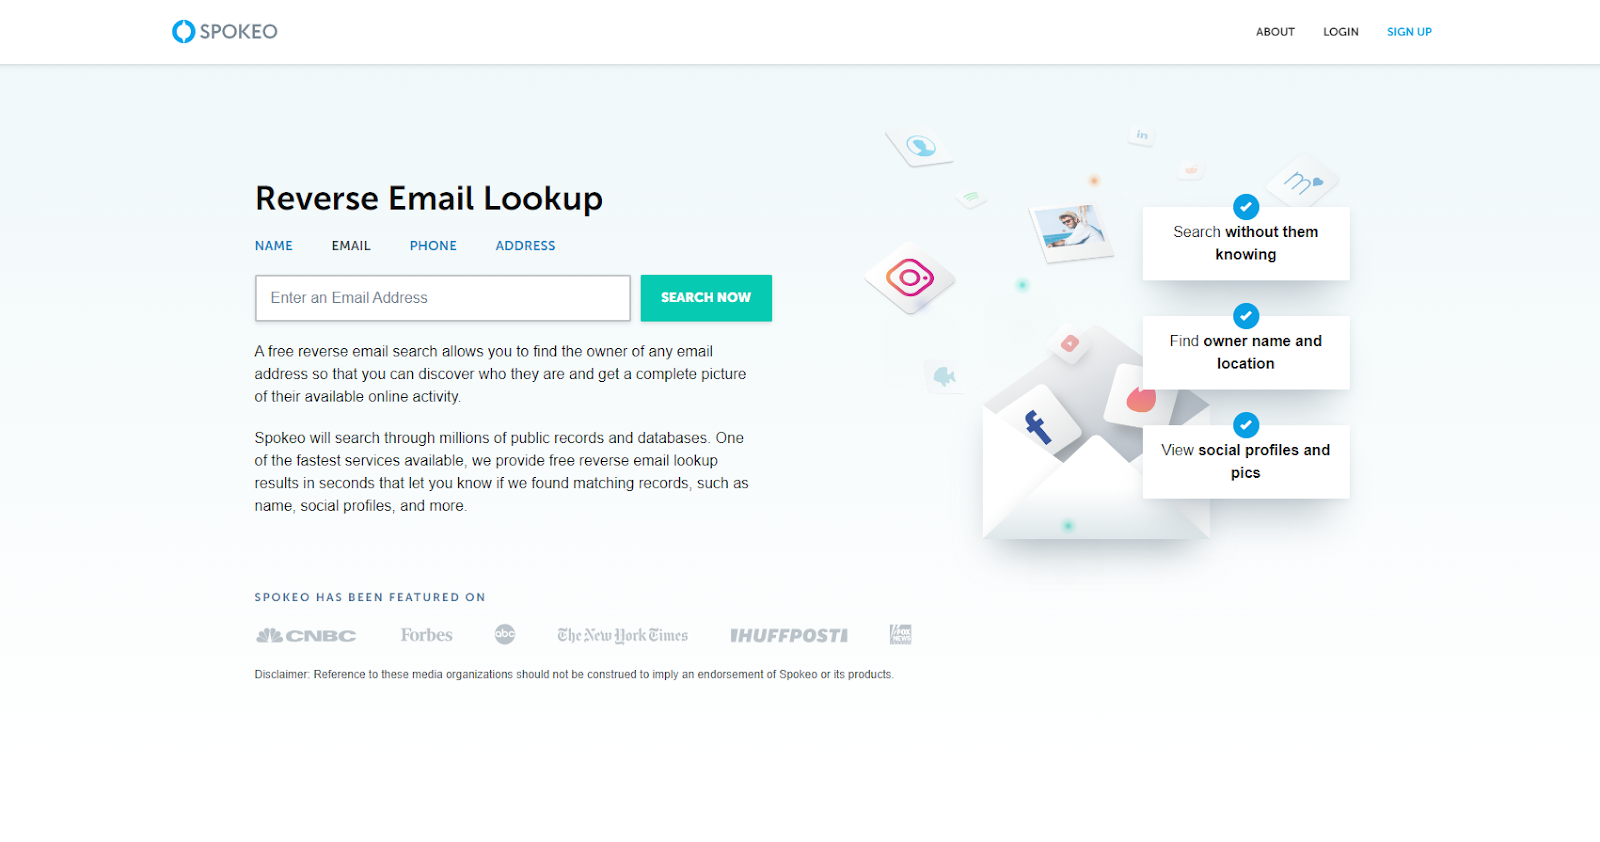 Best Reverse Email Lookup Tools: Spokeo